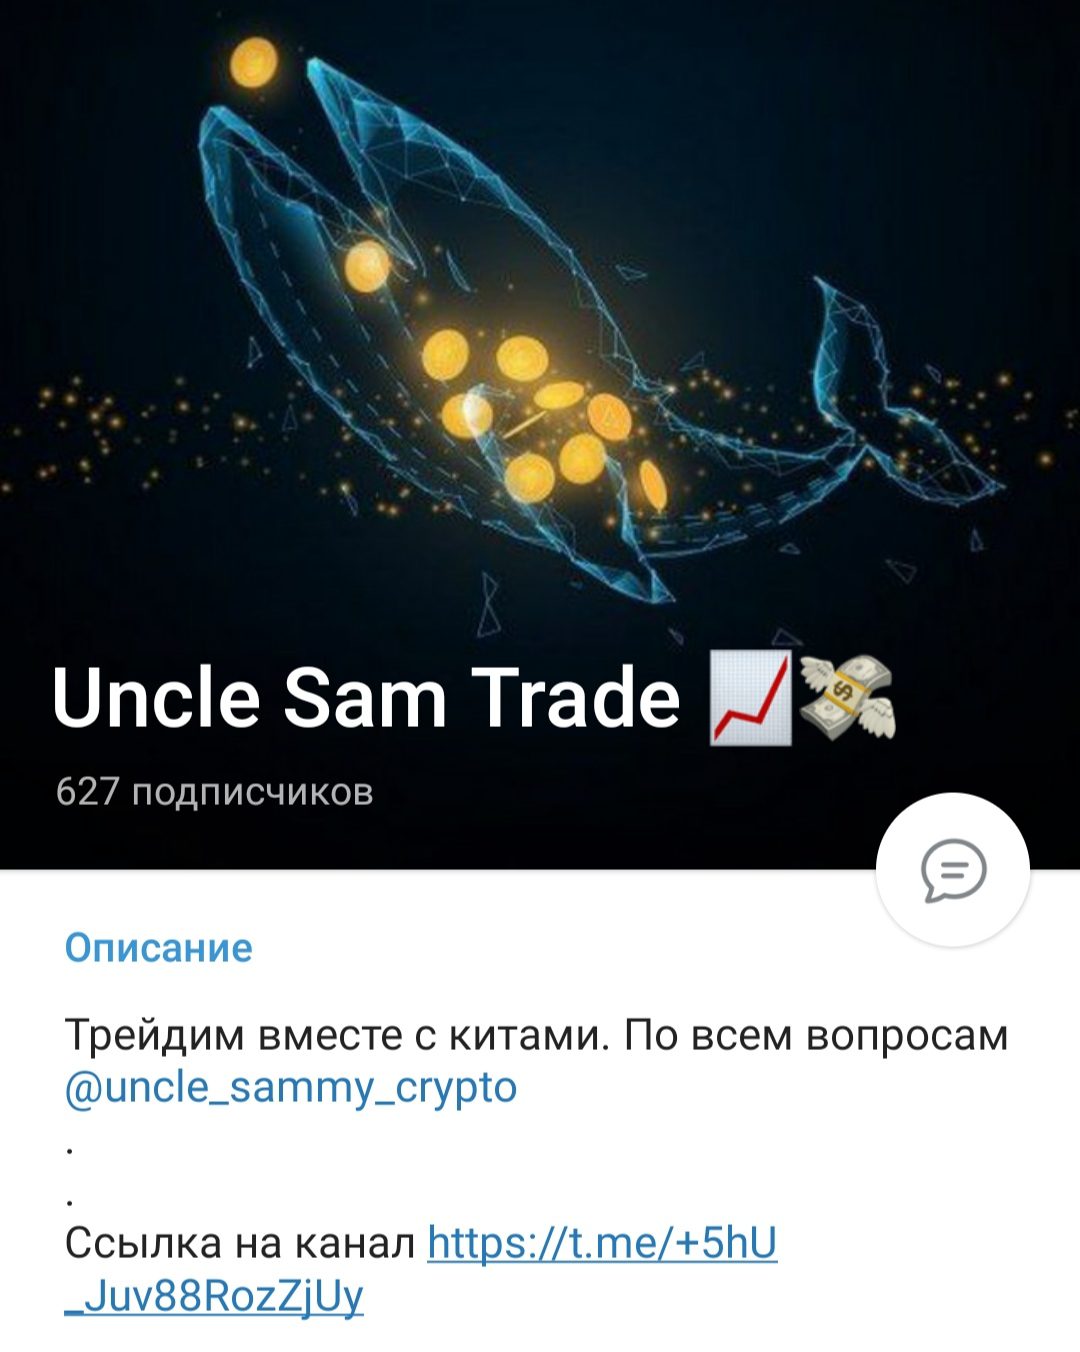 Uncle Sam Trade телеграмм